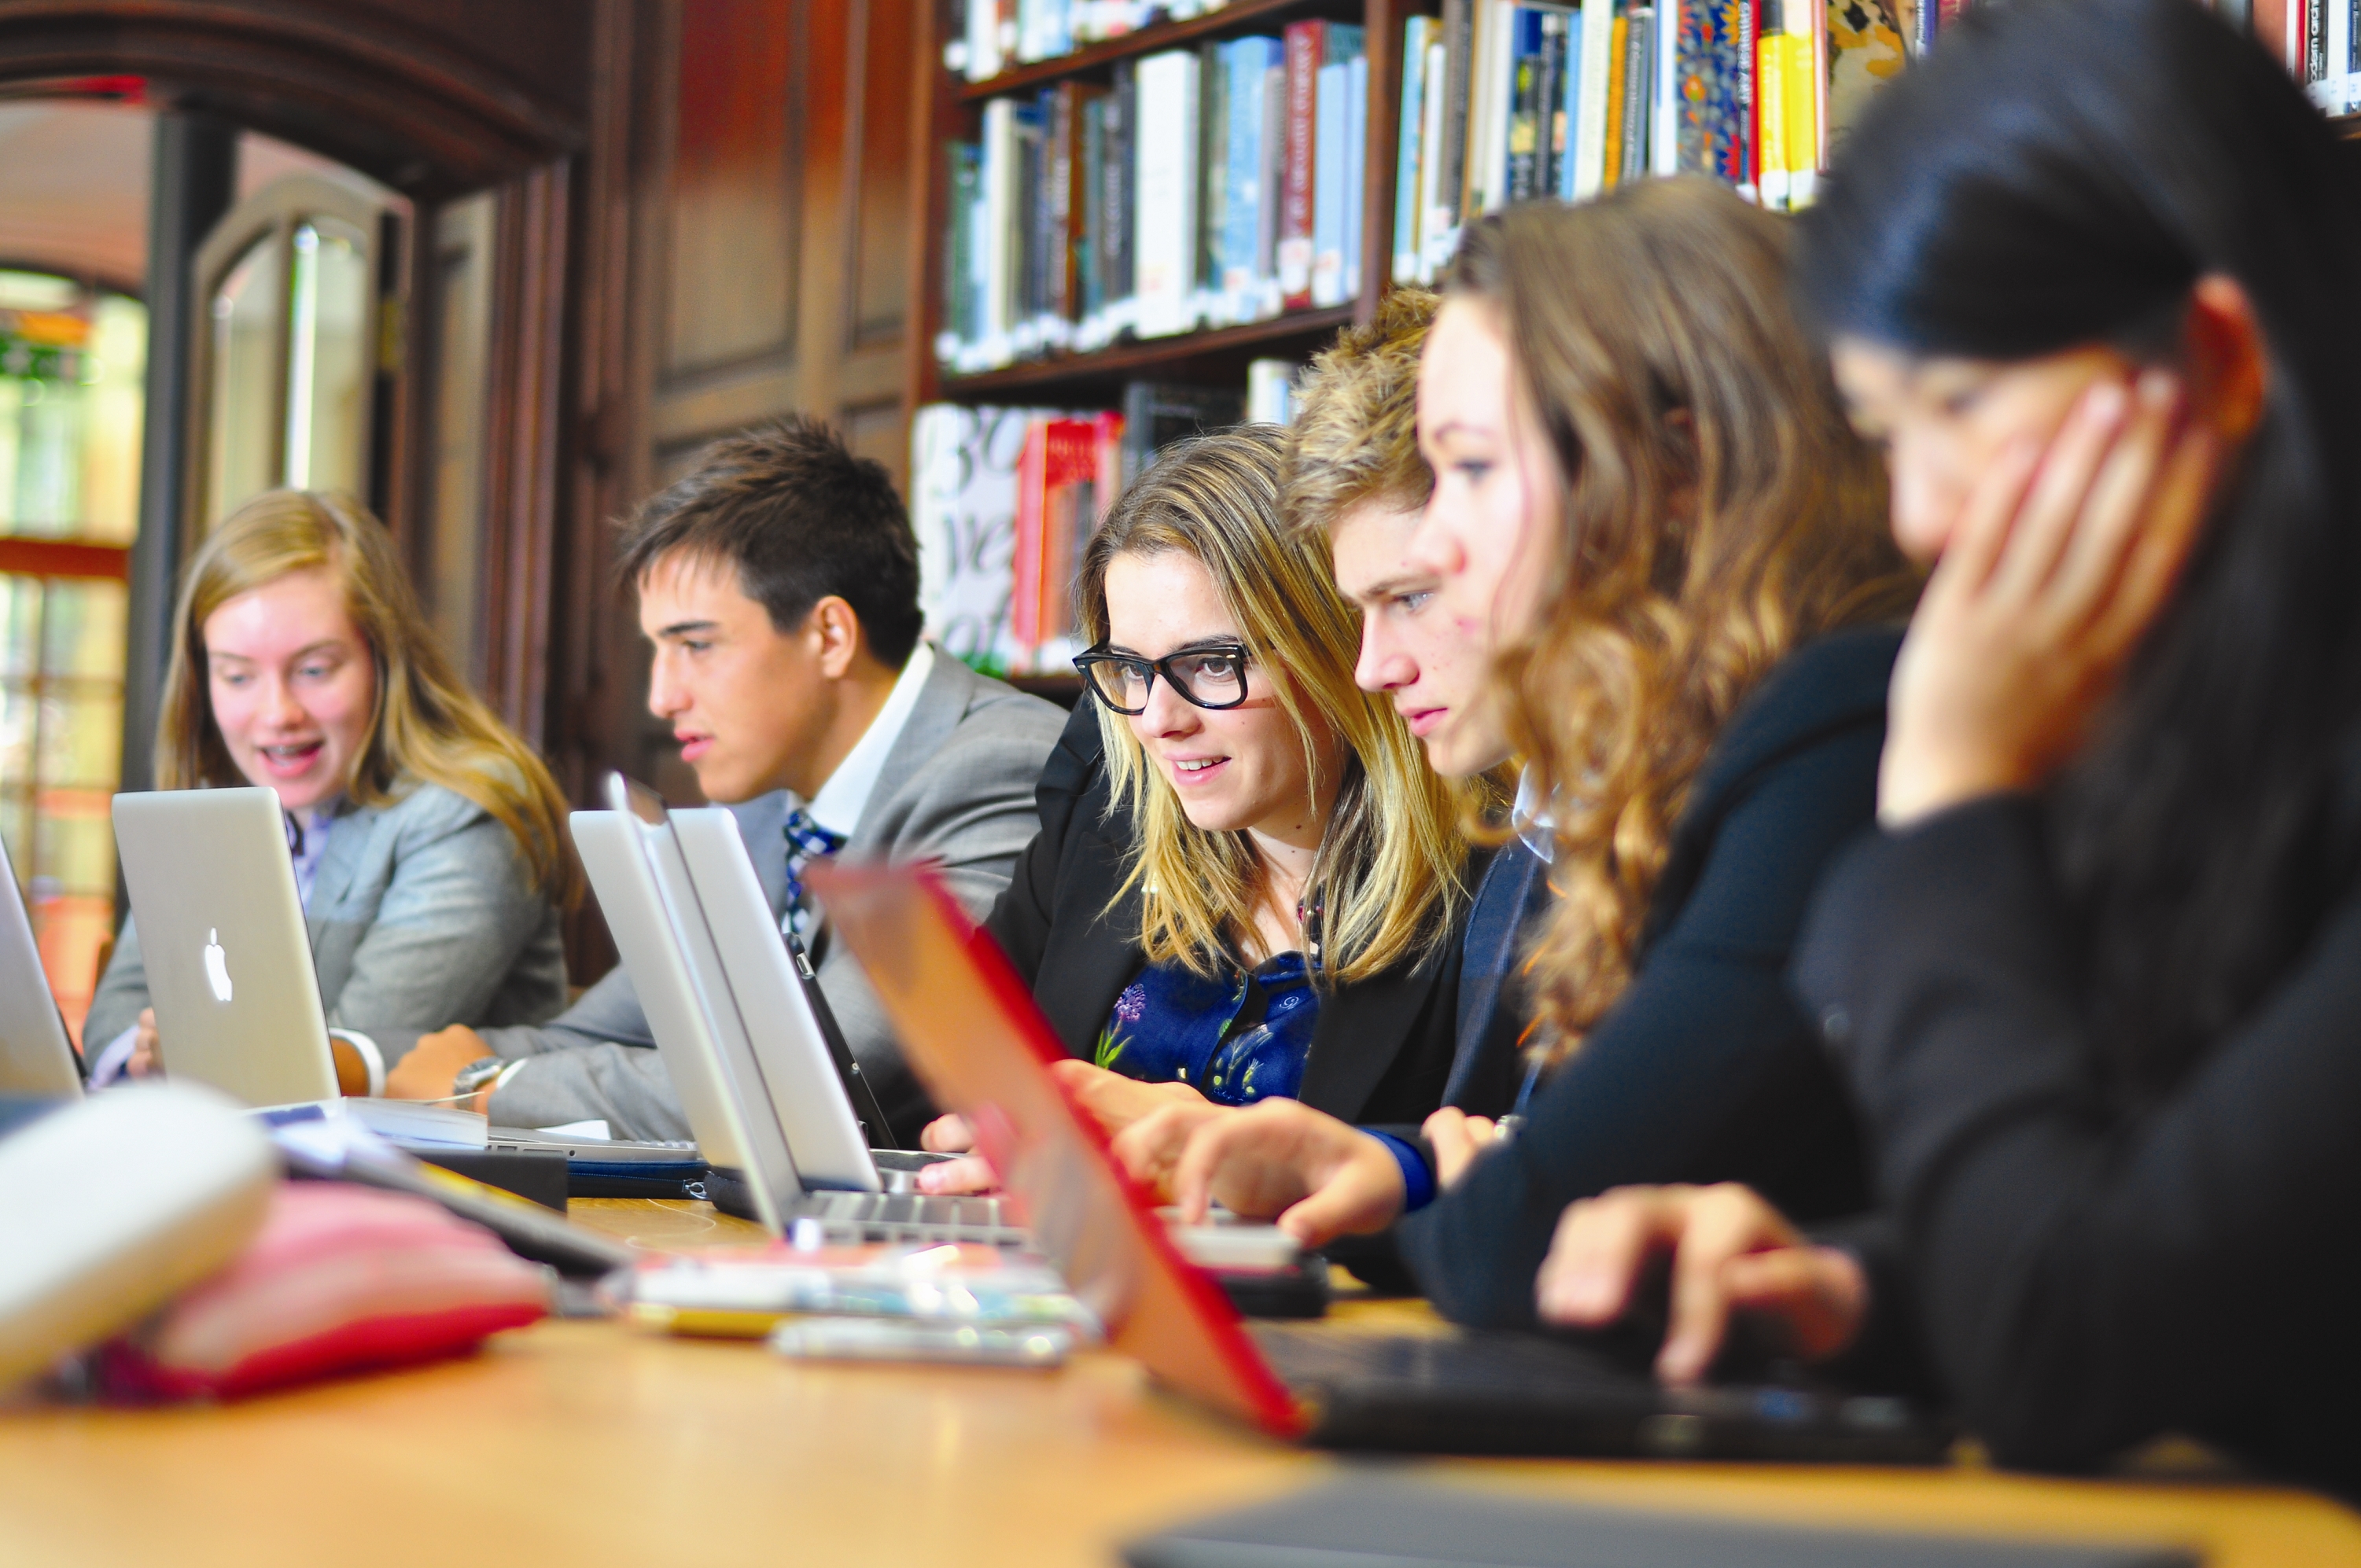 Wellington-College-Students-Studying-Laptops.jpg